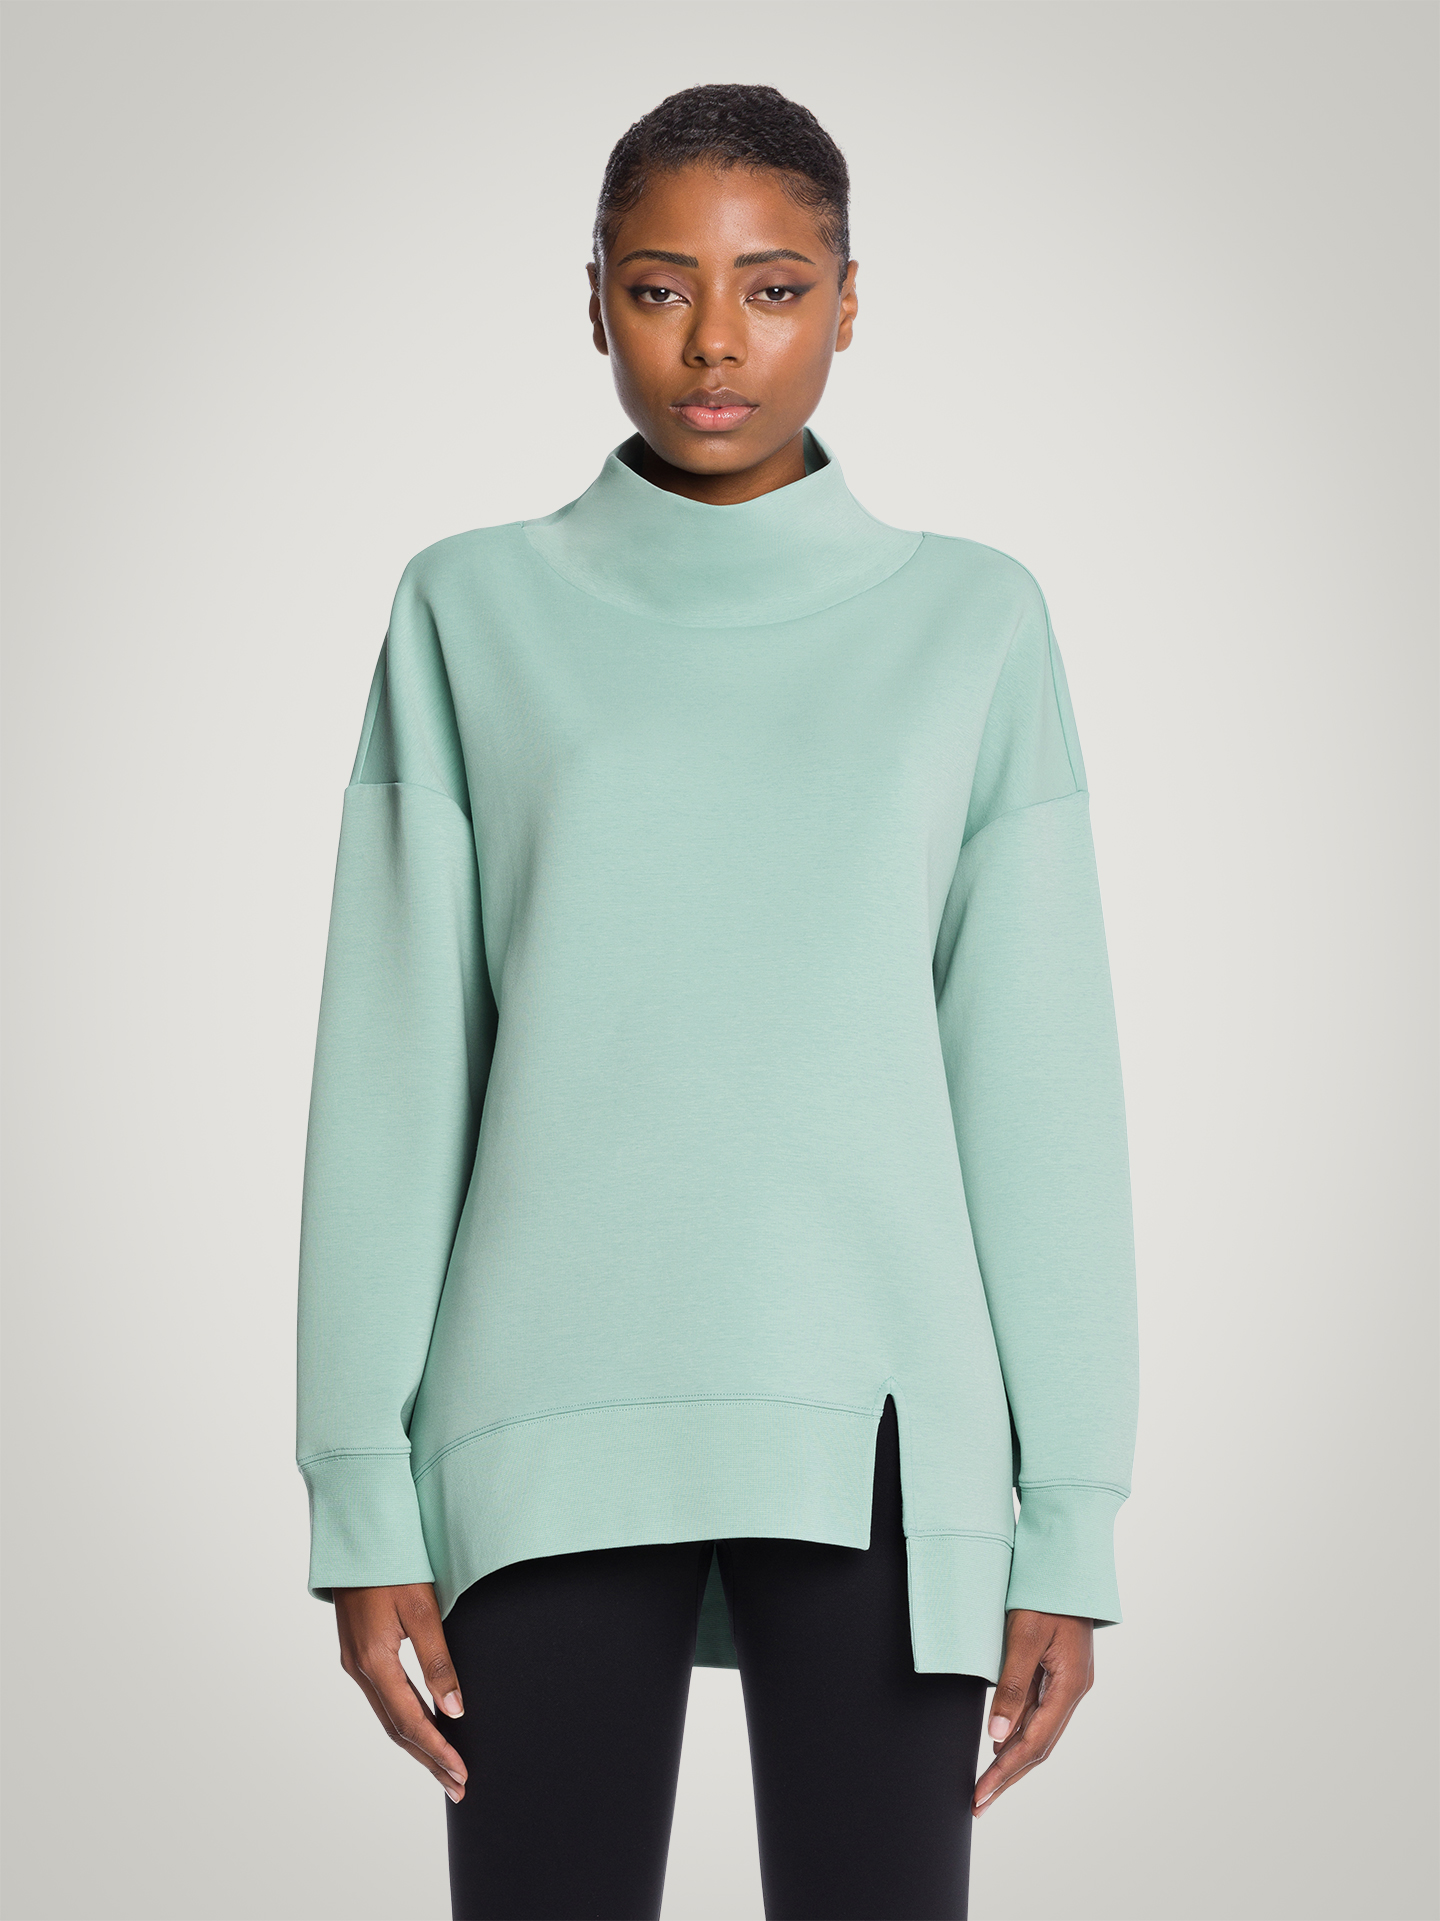 Wolford - Sweater Top Long Sleeves, Frau, icy mint, Größe: L günstig online kaufen